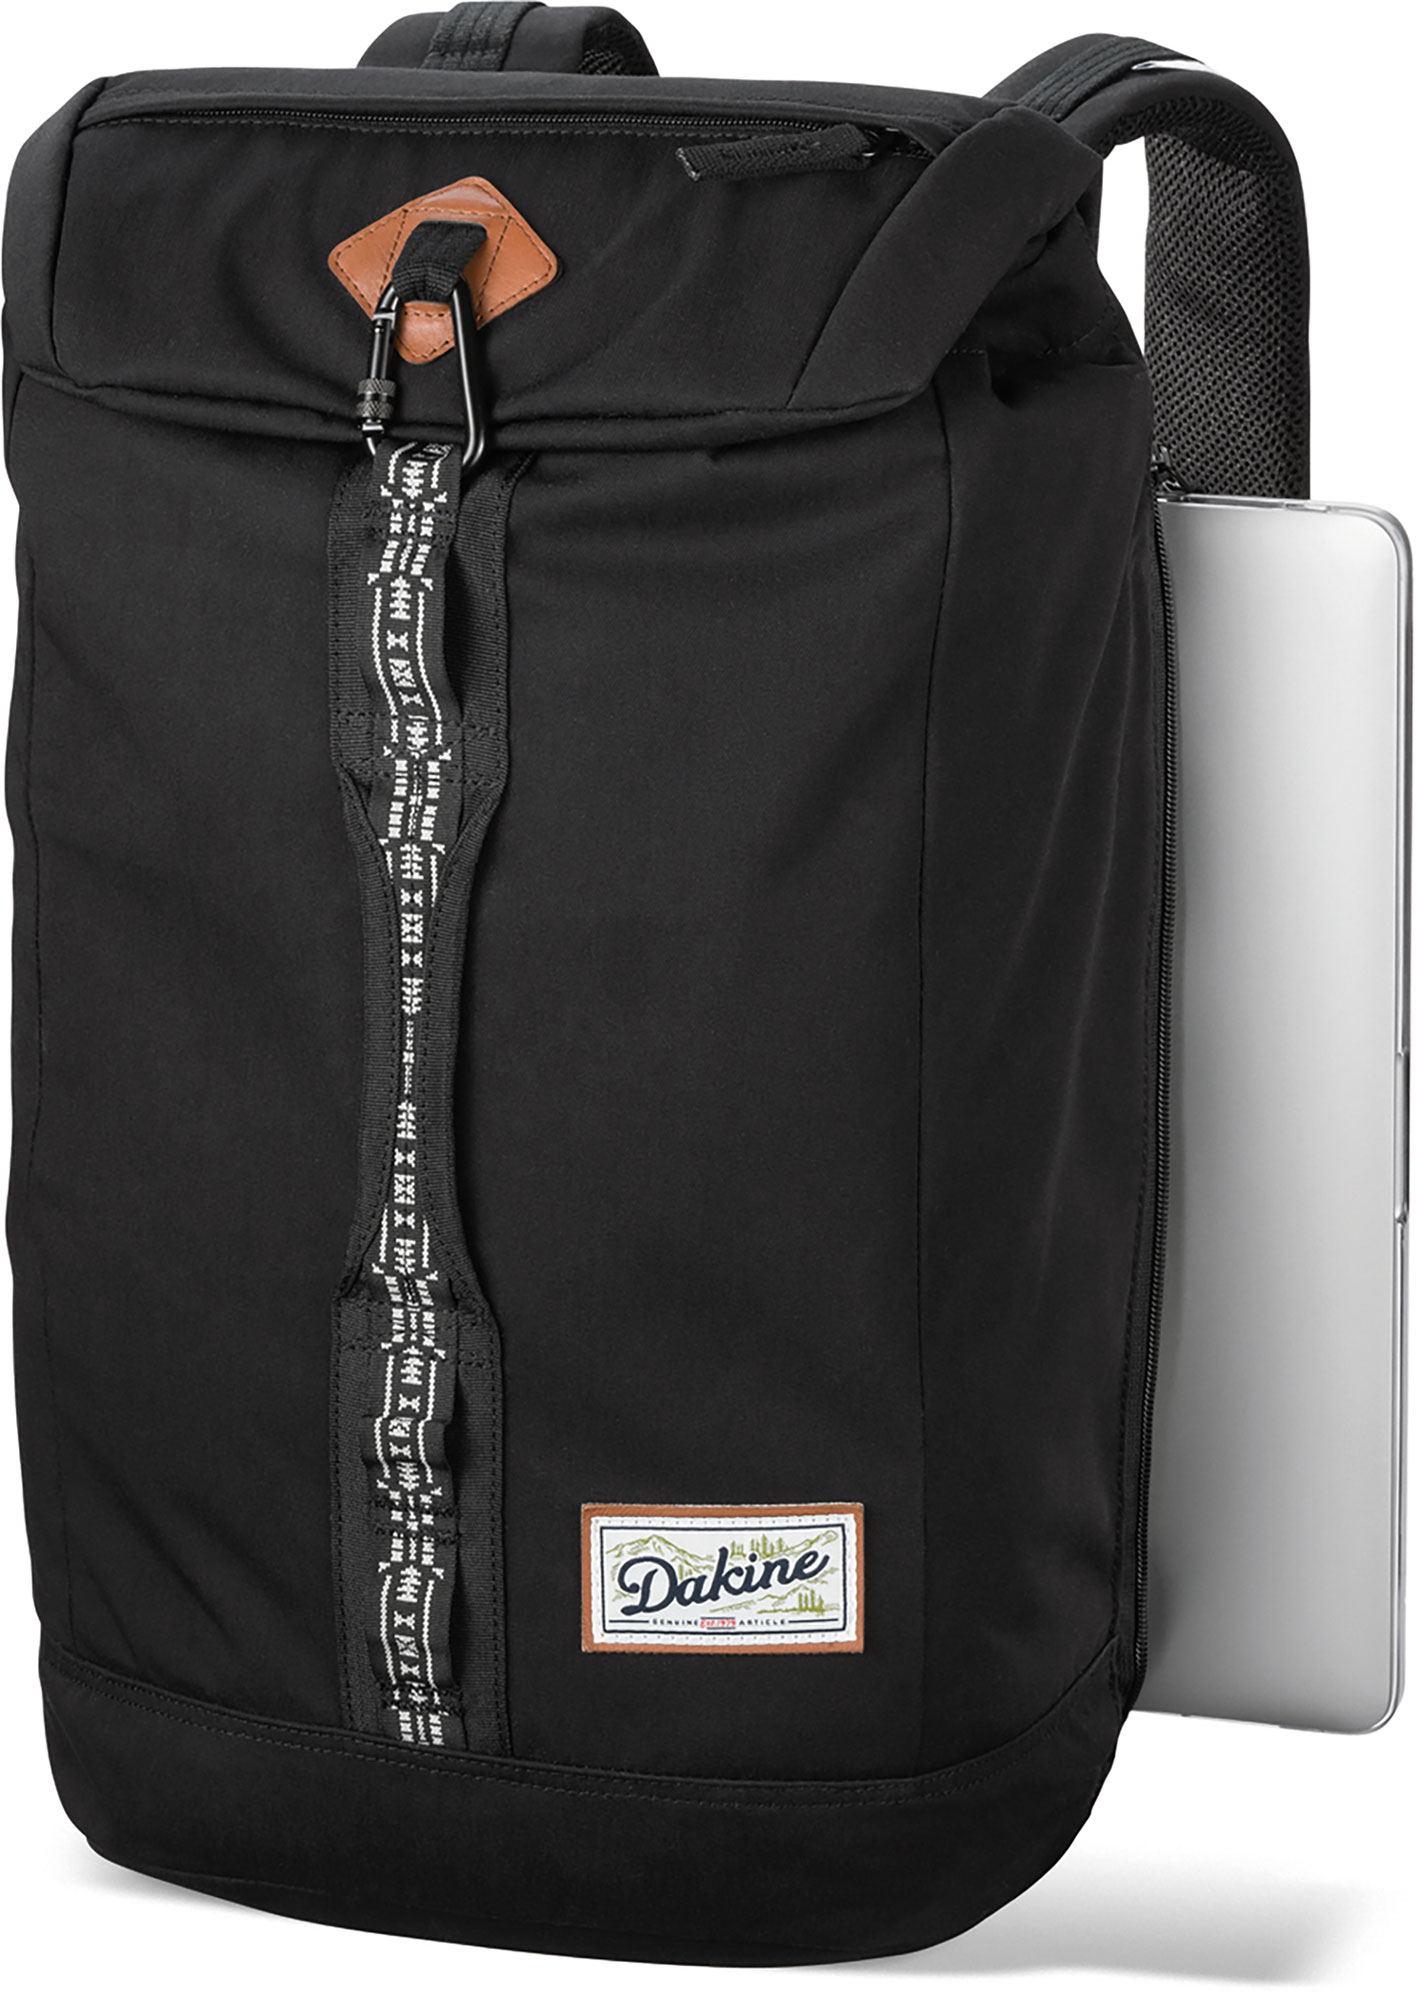 School fashion backpack